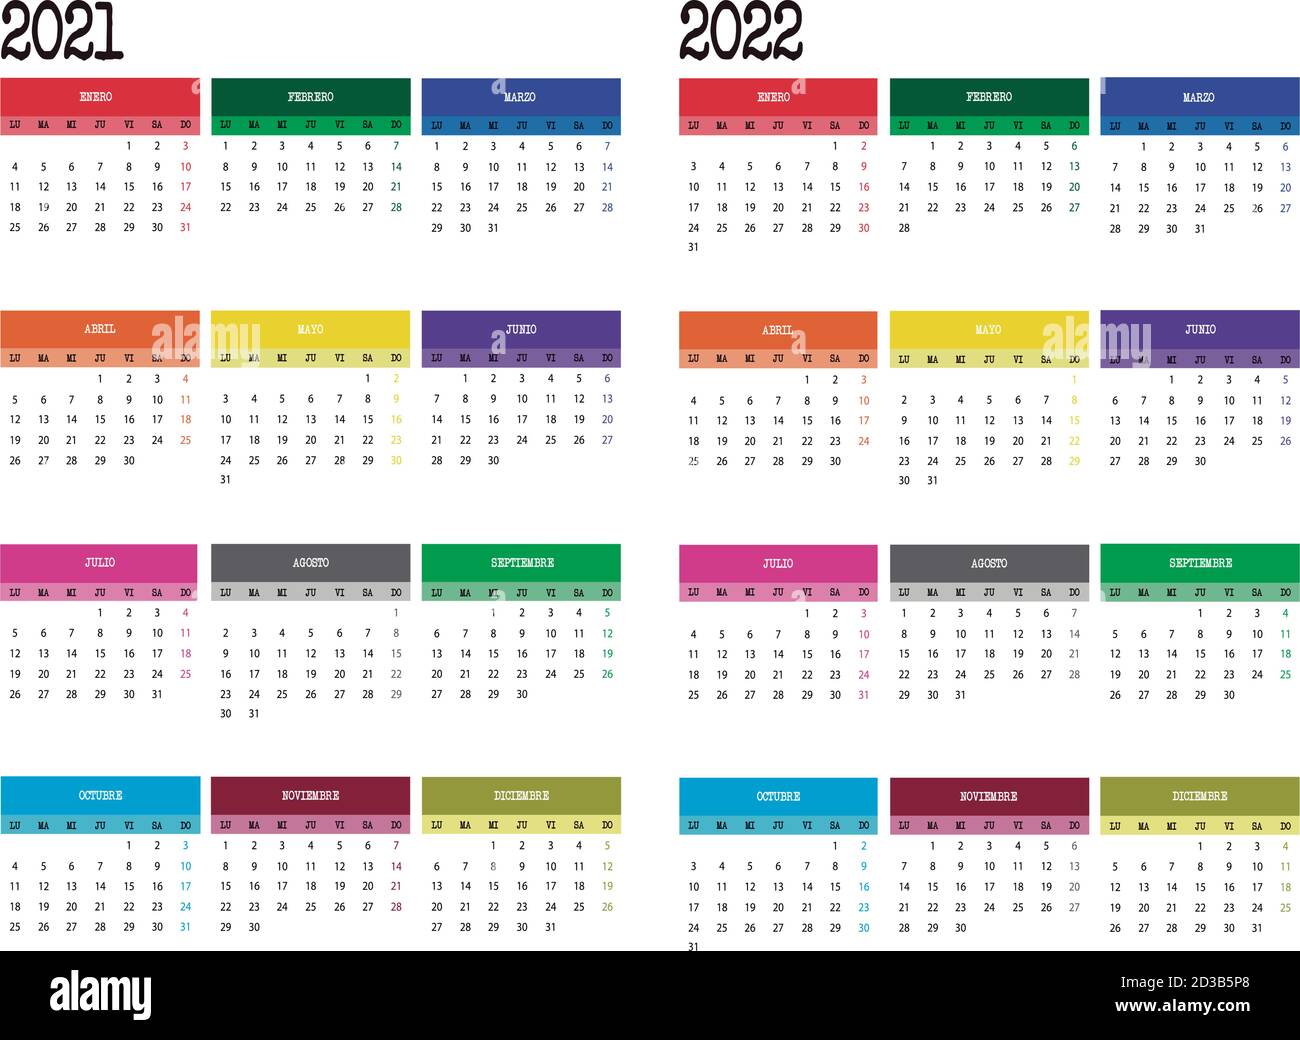 Calendar year 2021 2022 Stock Vector